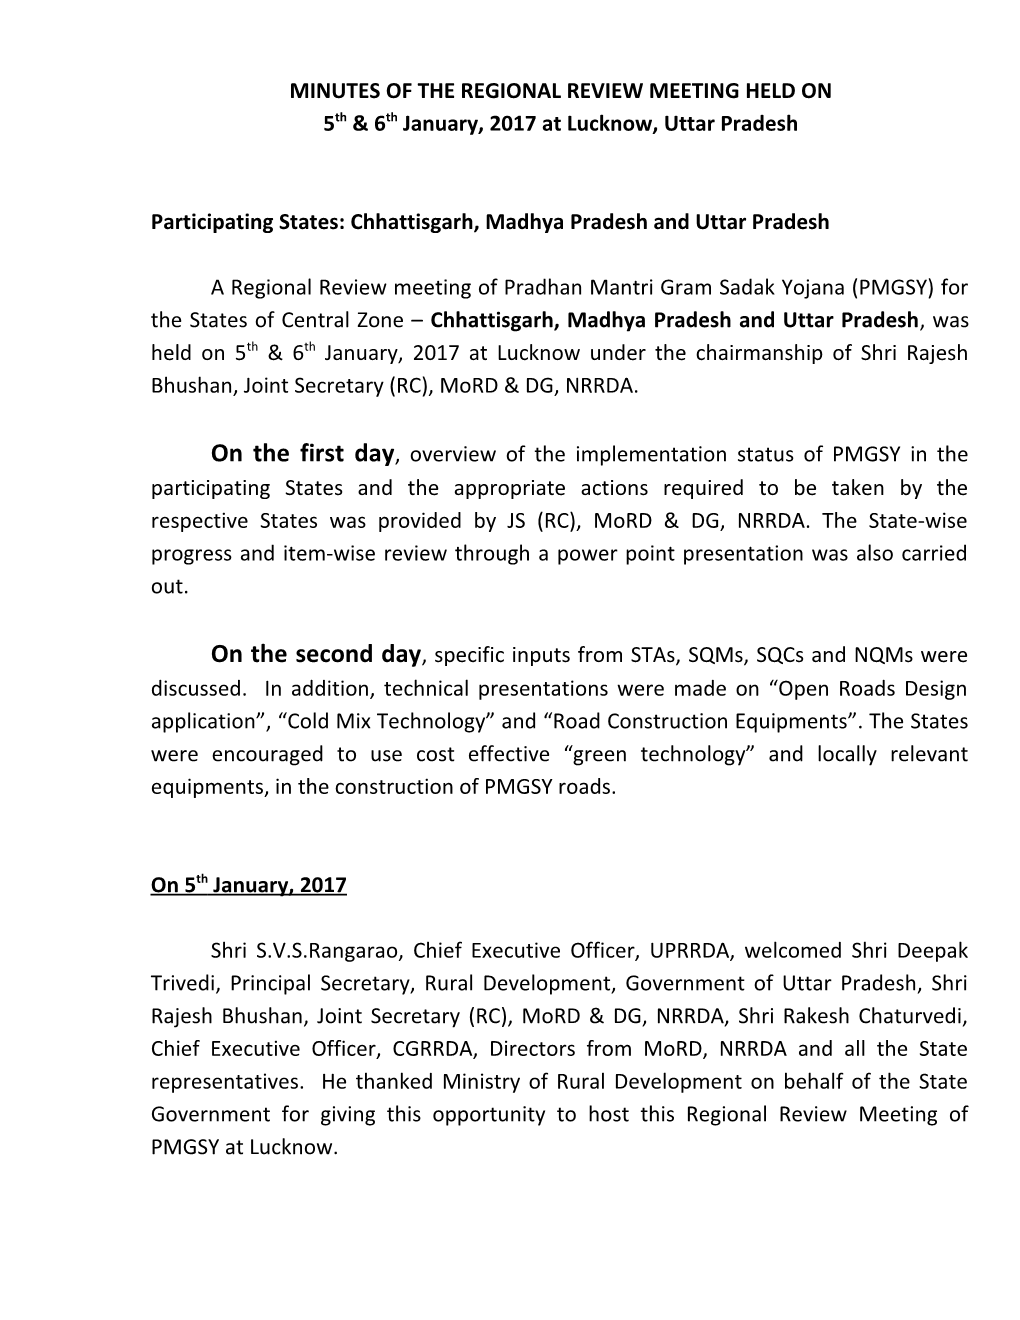 Participating States: Chhattisgarh, Madhya Pradesh and Uttar Pradesh